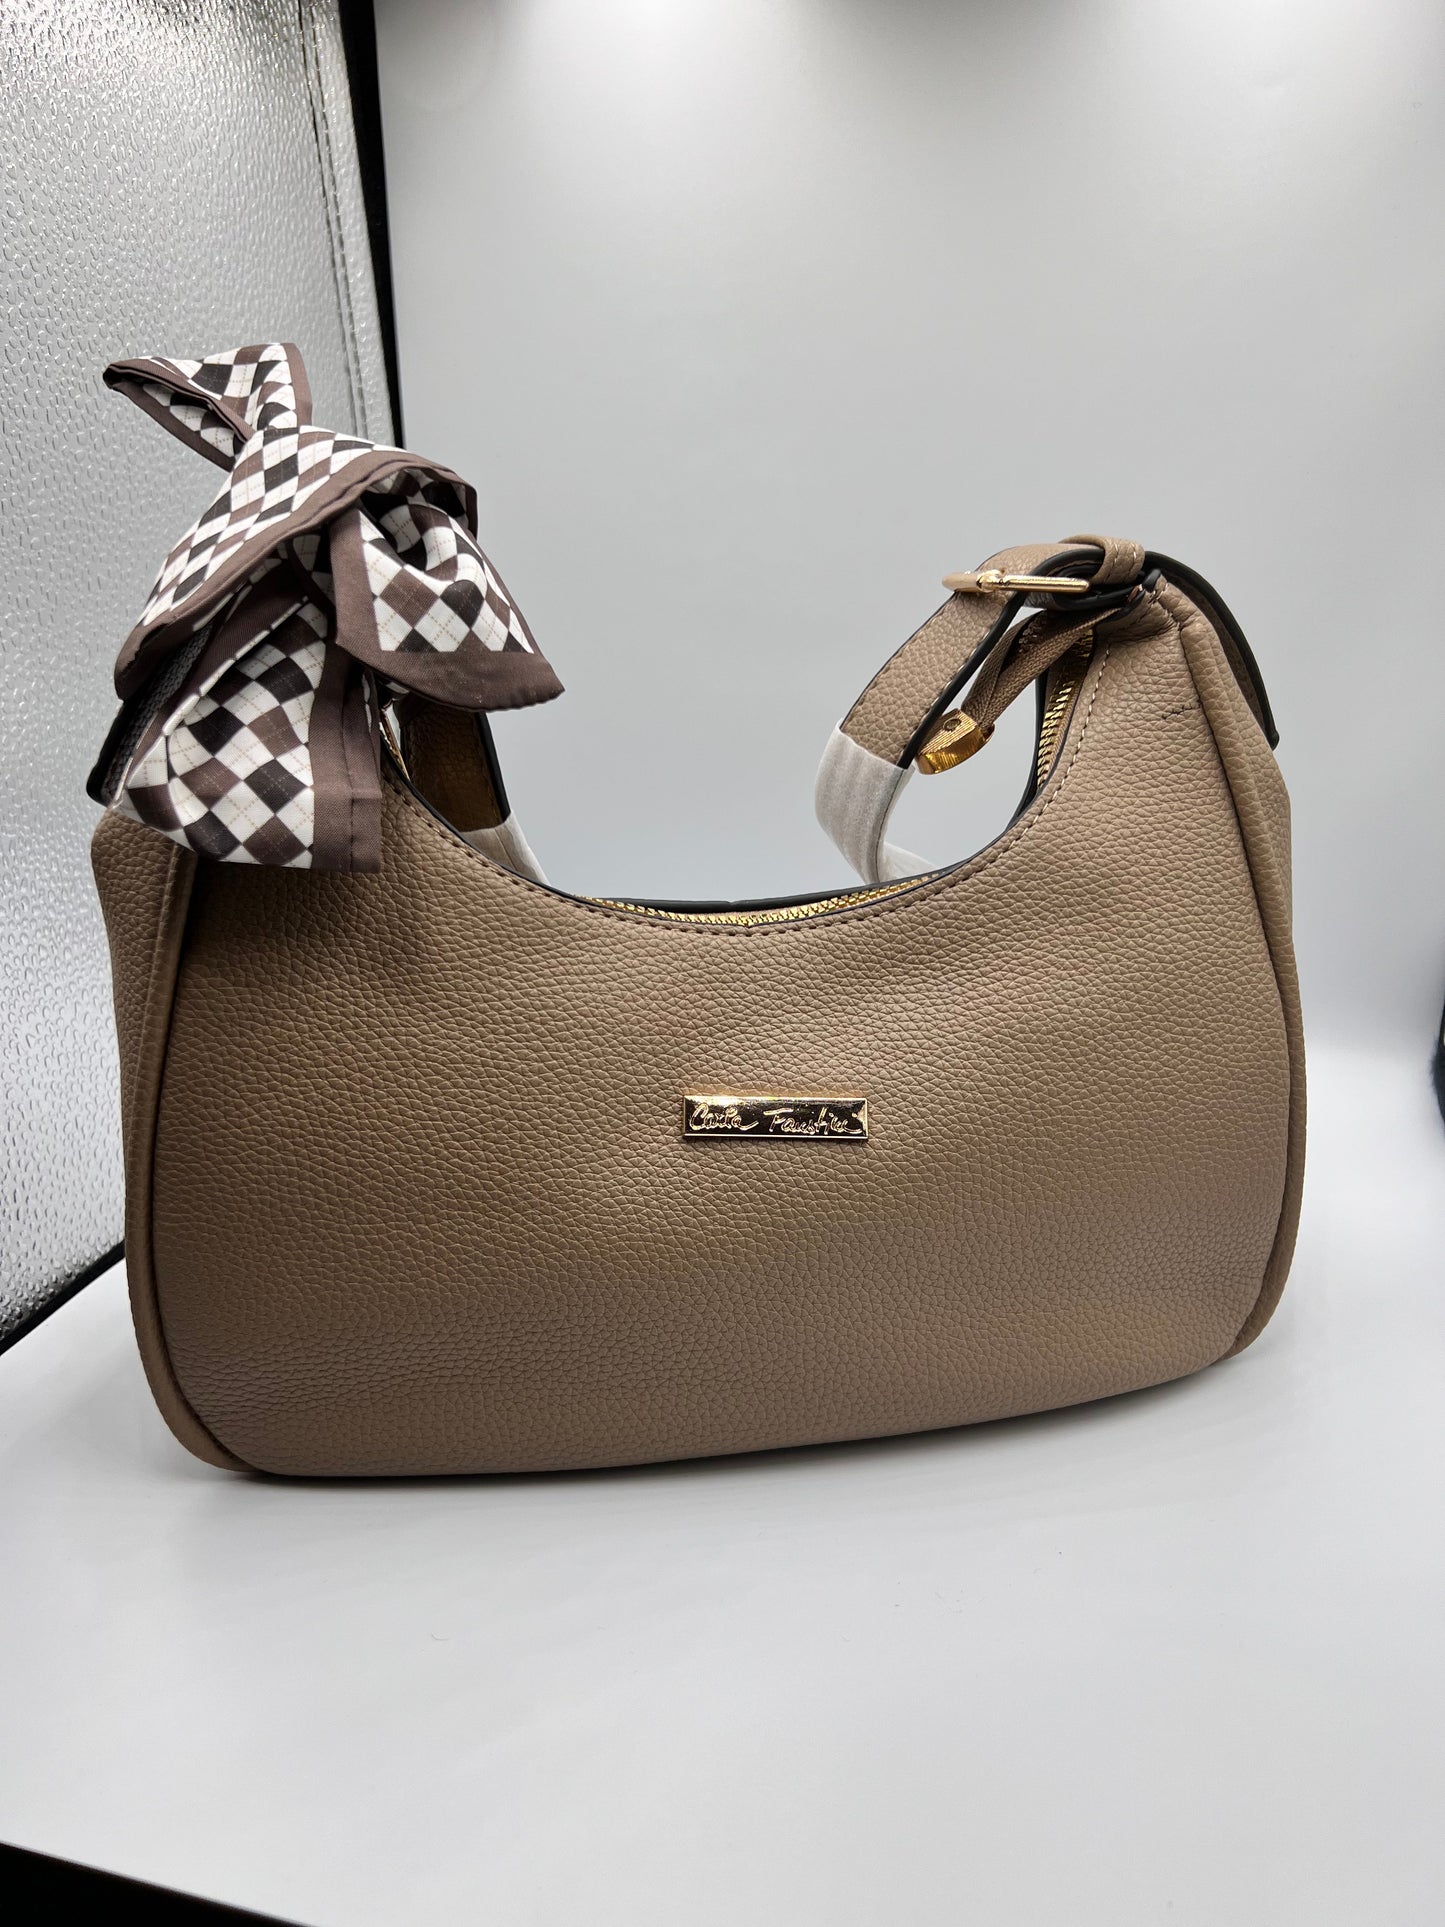 "Luxury Handbags